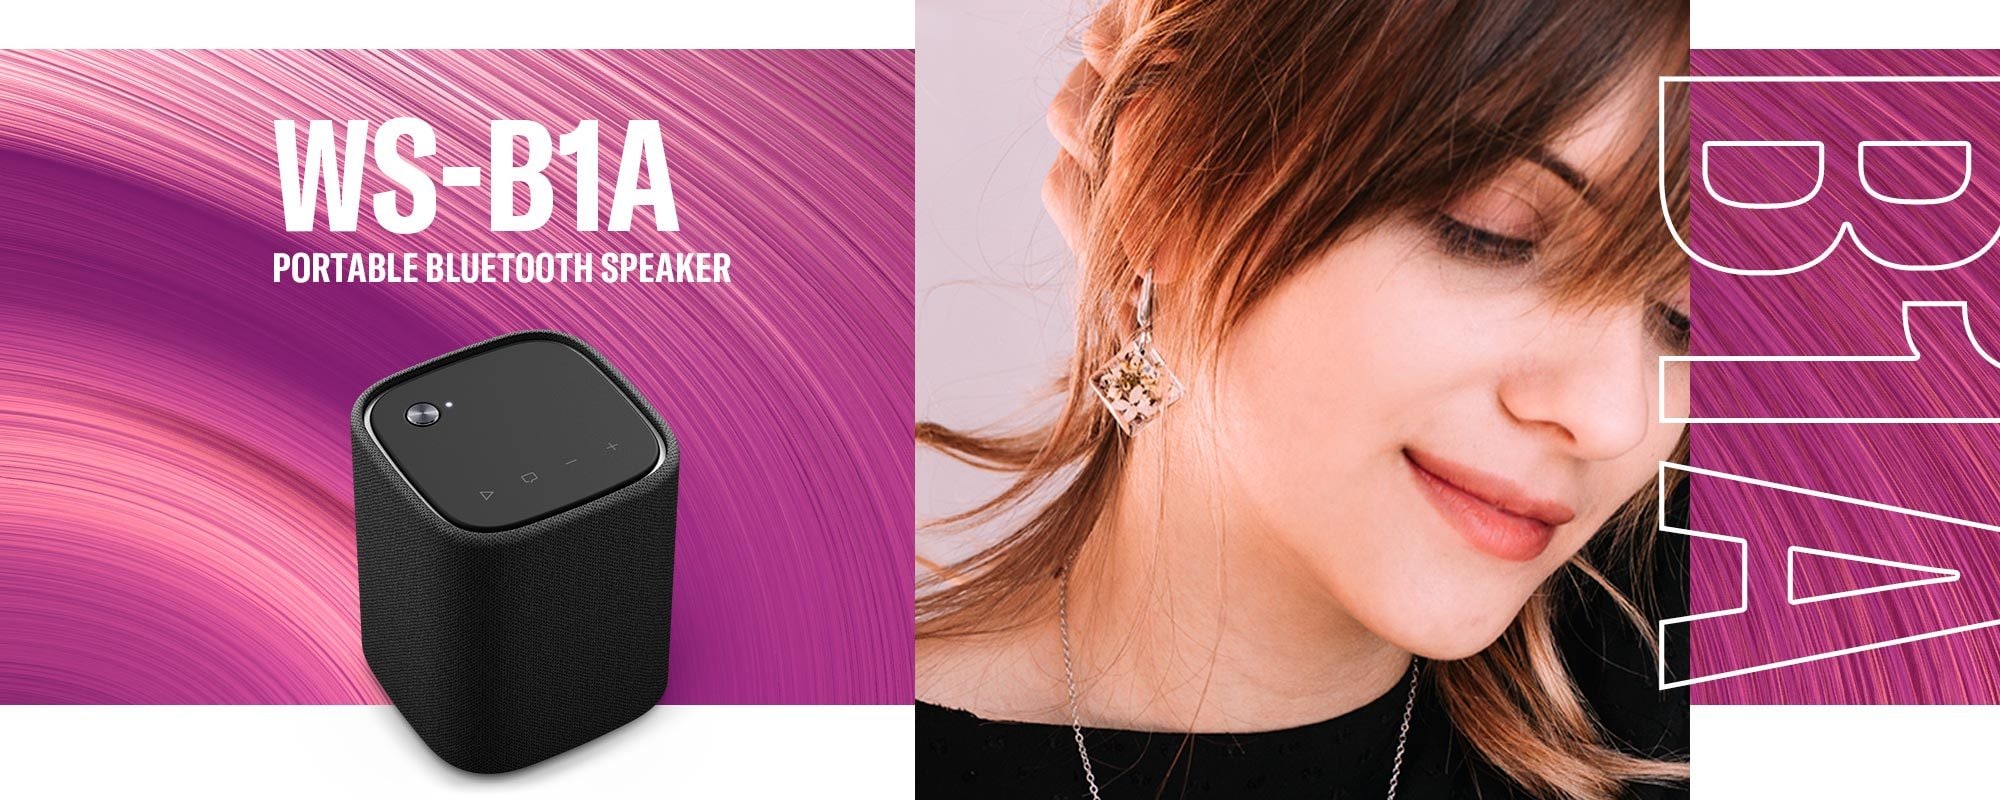 WS-B1A Portable Bluetooth Speaker - Header Image - Desktop